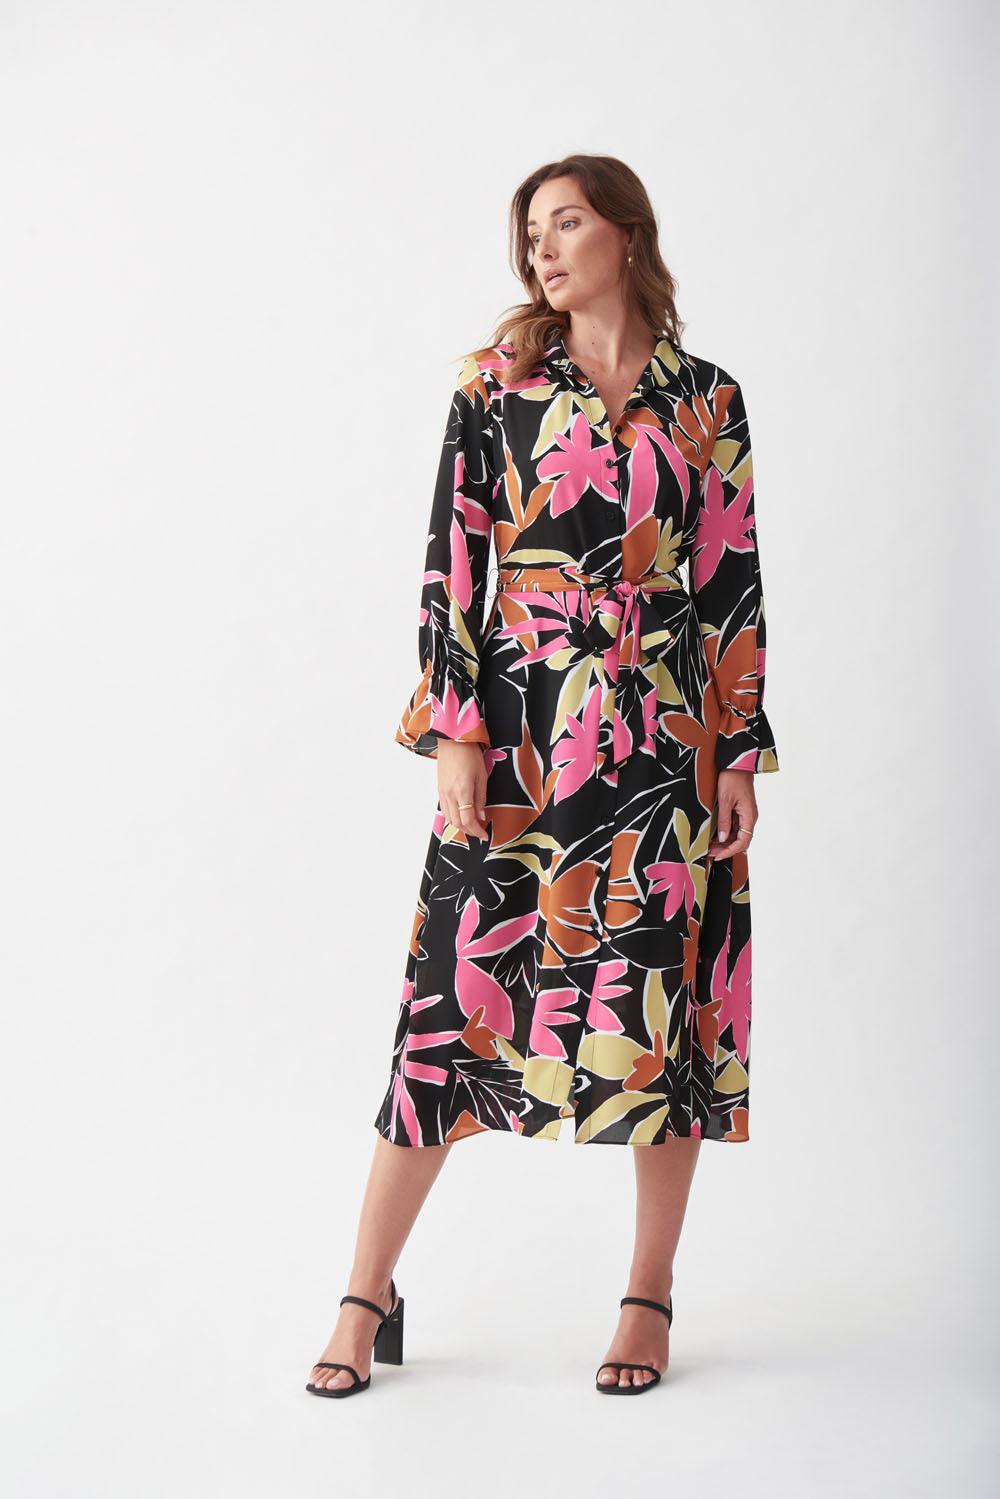 Joseph Ribkoff Black-Vanilla Floral Print Dress Style 221271